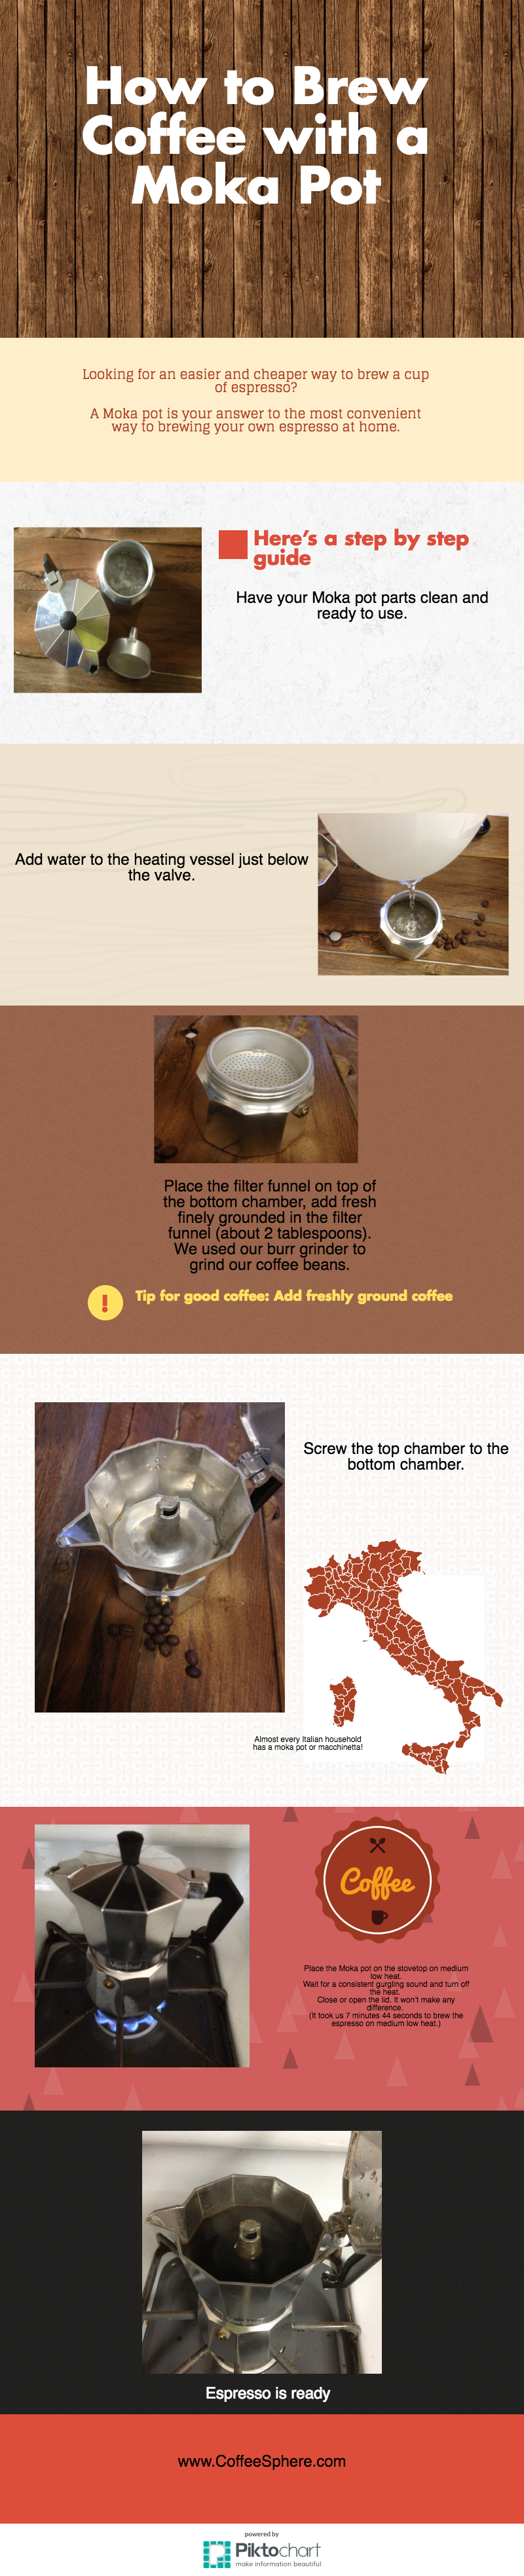 CoffeeSphere Moka Pot Infographic